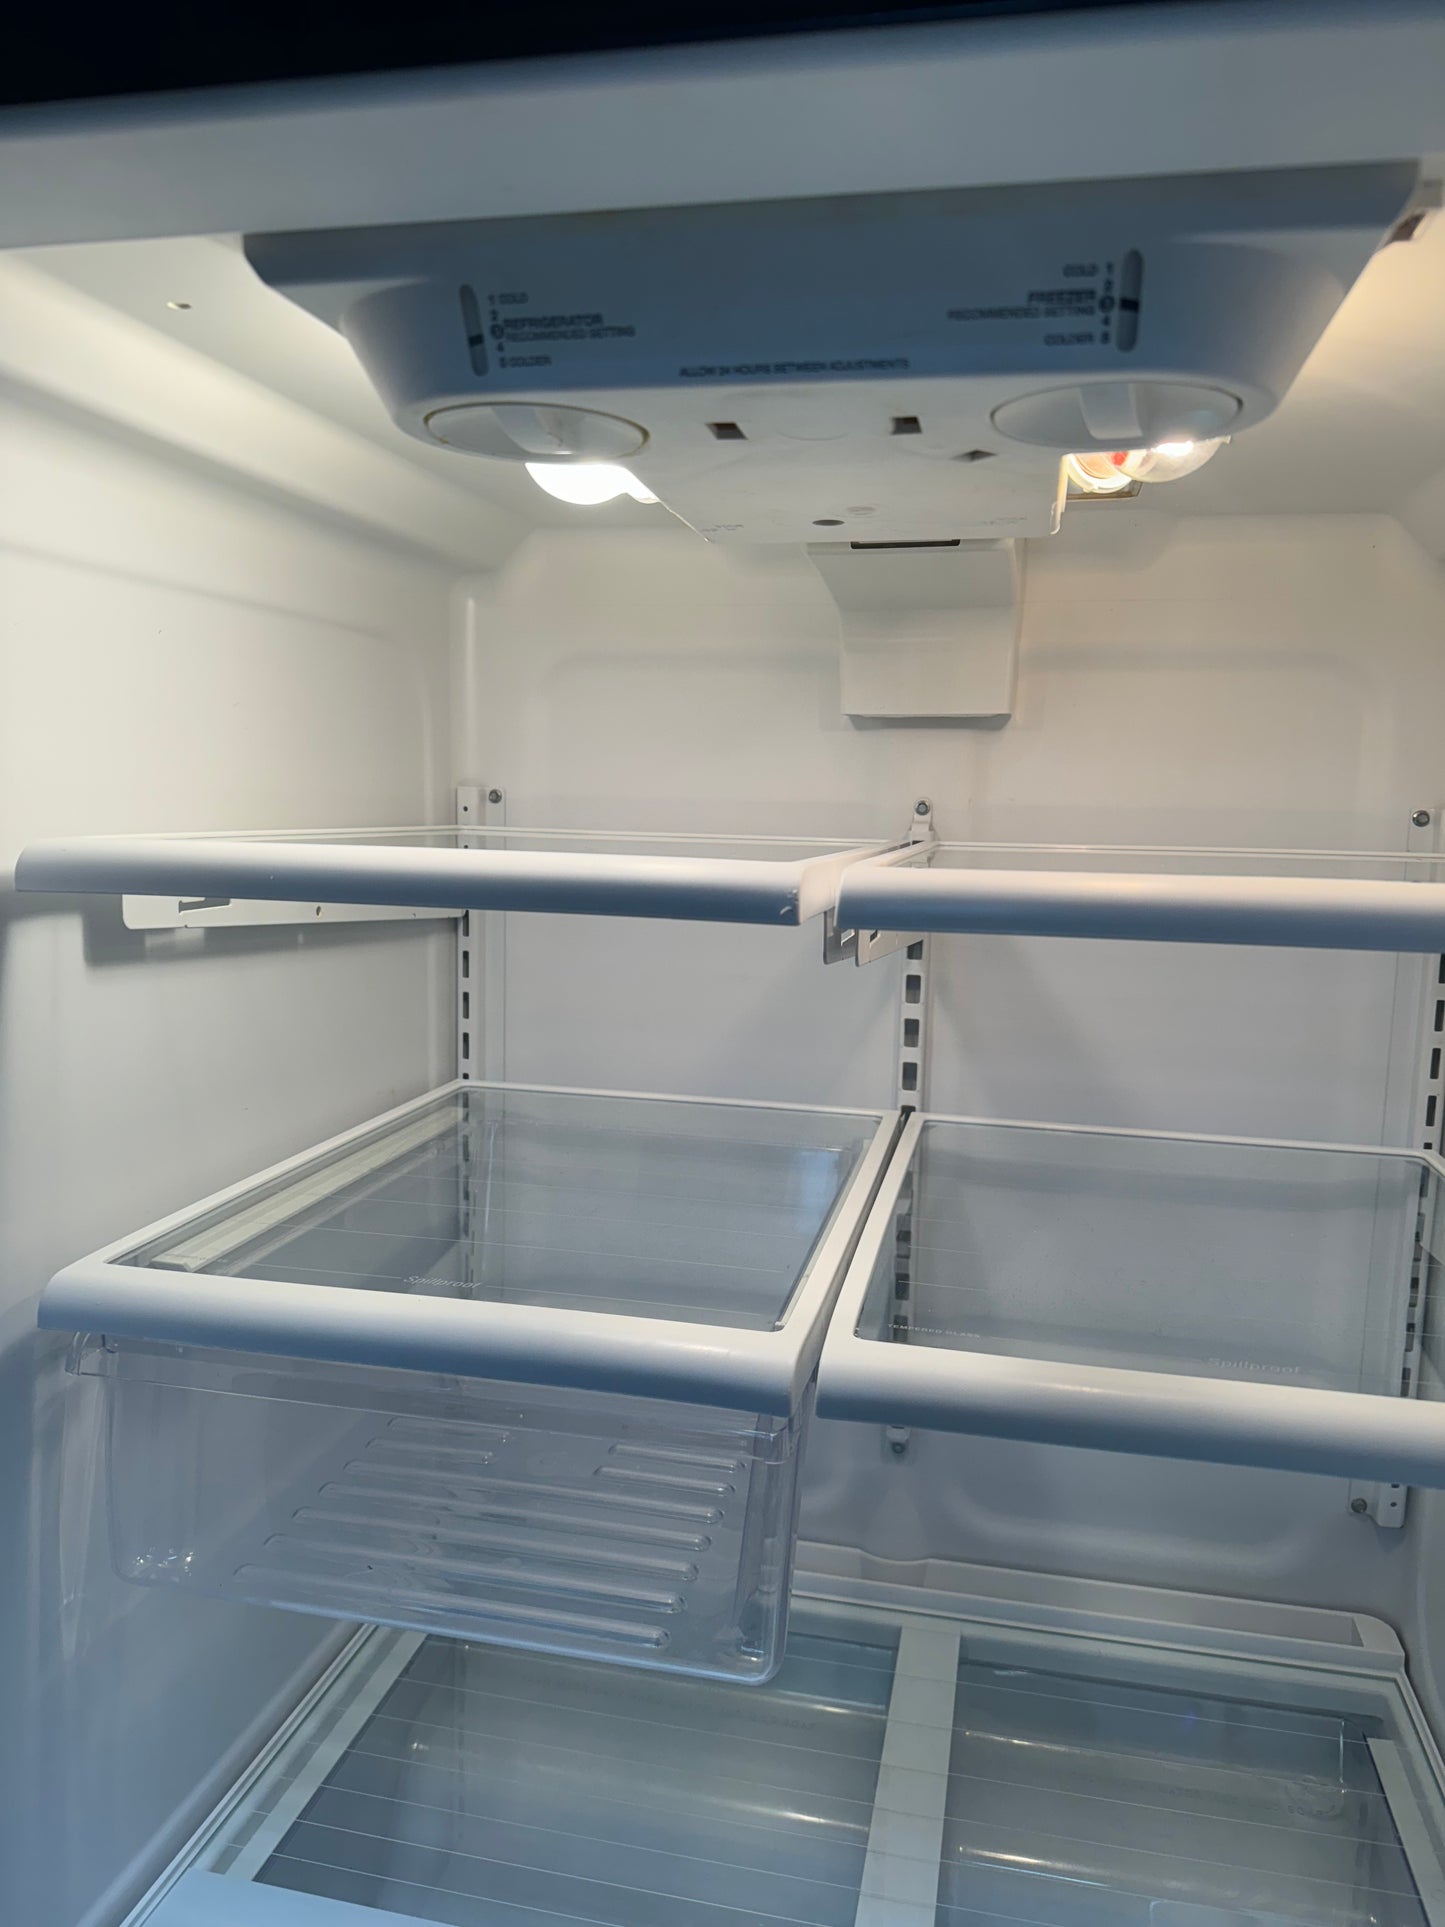 Maytag top freezer black 30 inch refrigerator